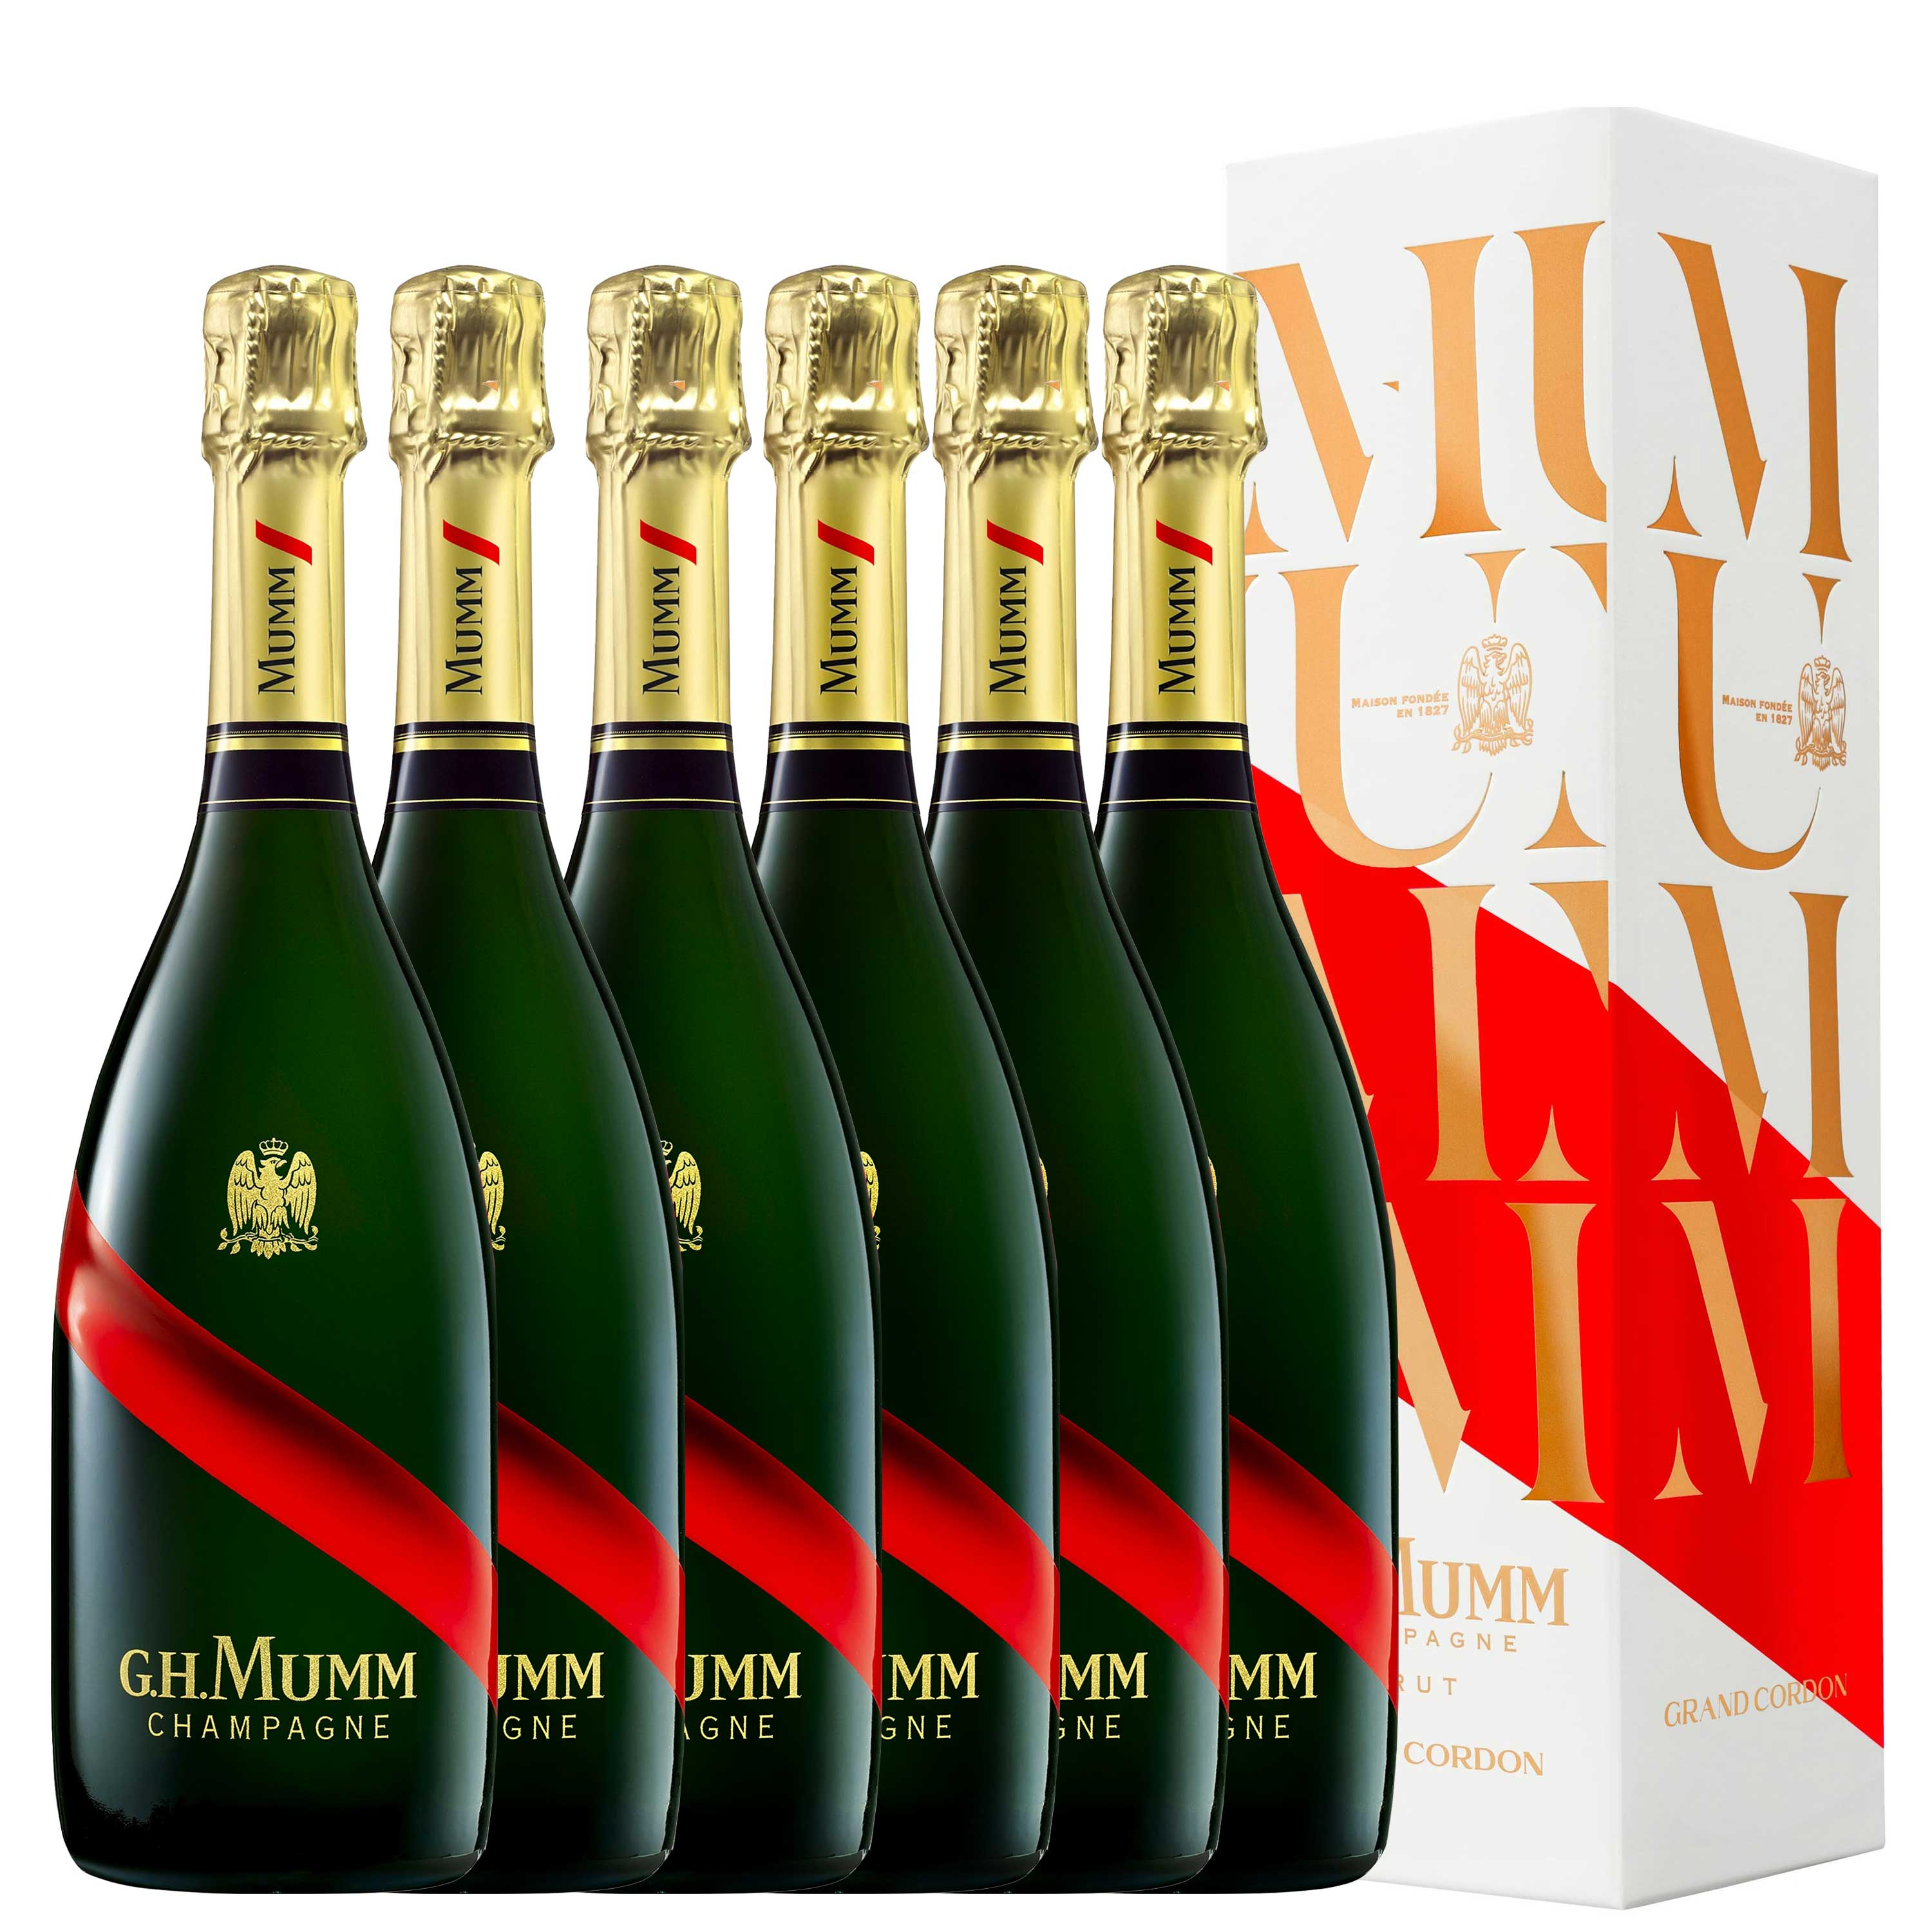 G H Mumm Grand Cordon Champagne